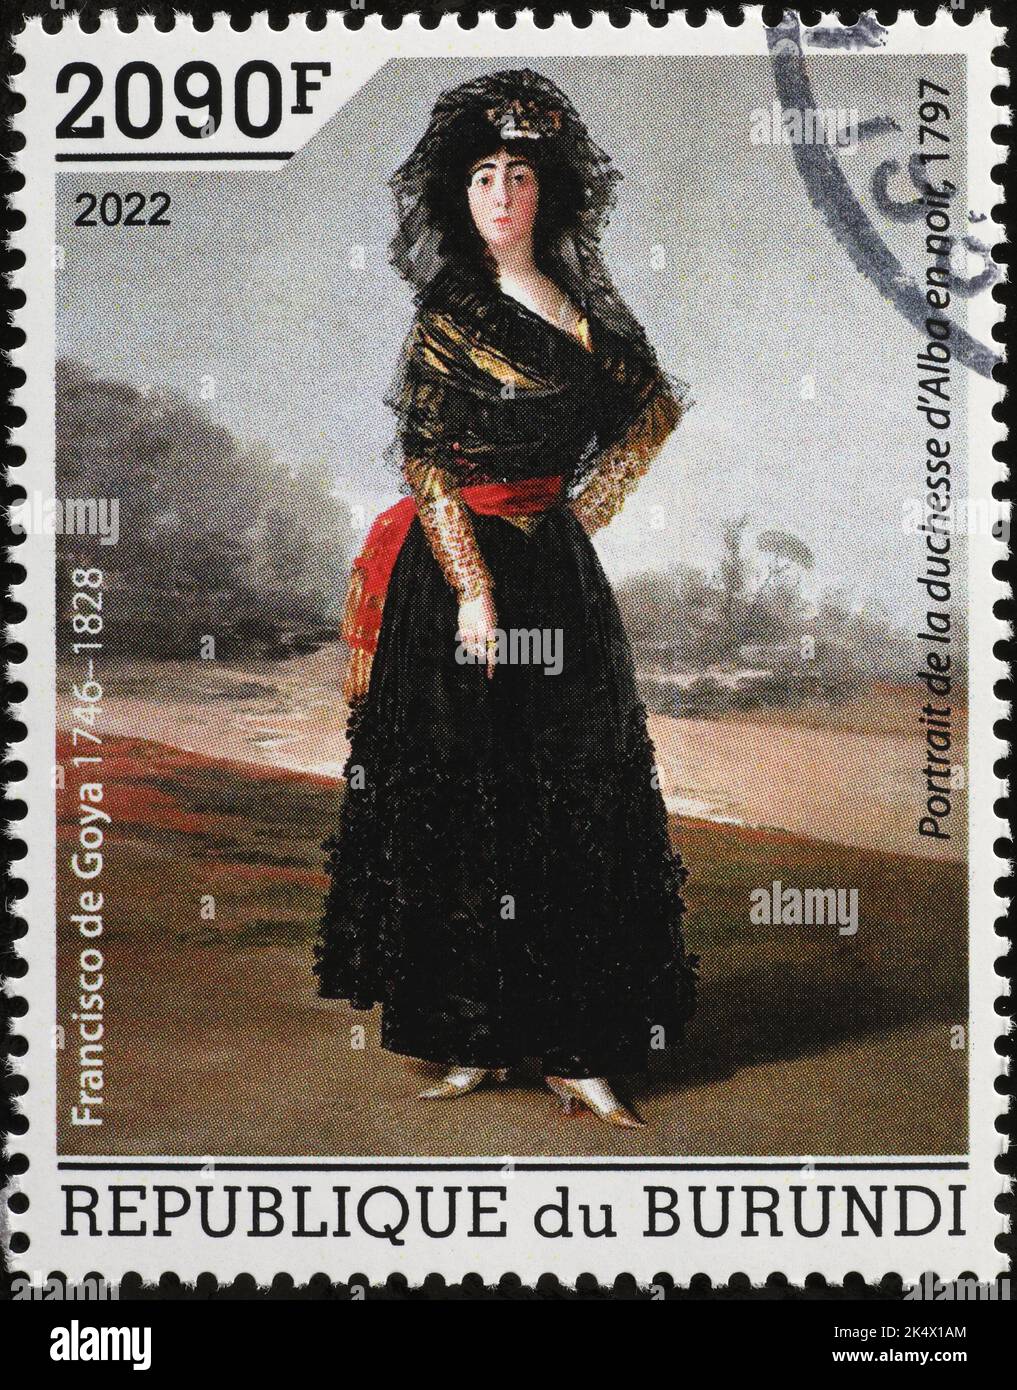 The Black Duchess by Francisco Goya on postage stamp Stock Photo